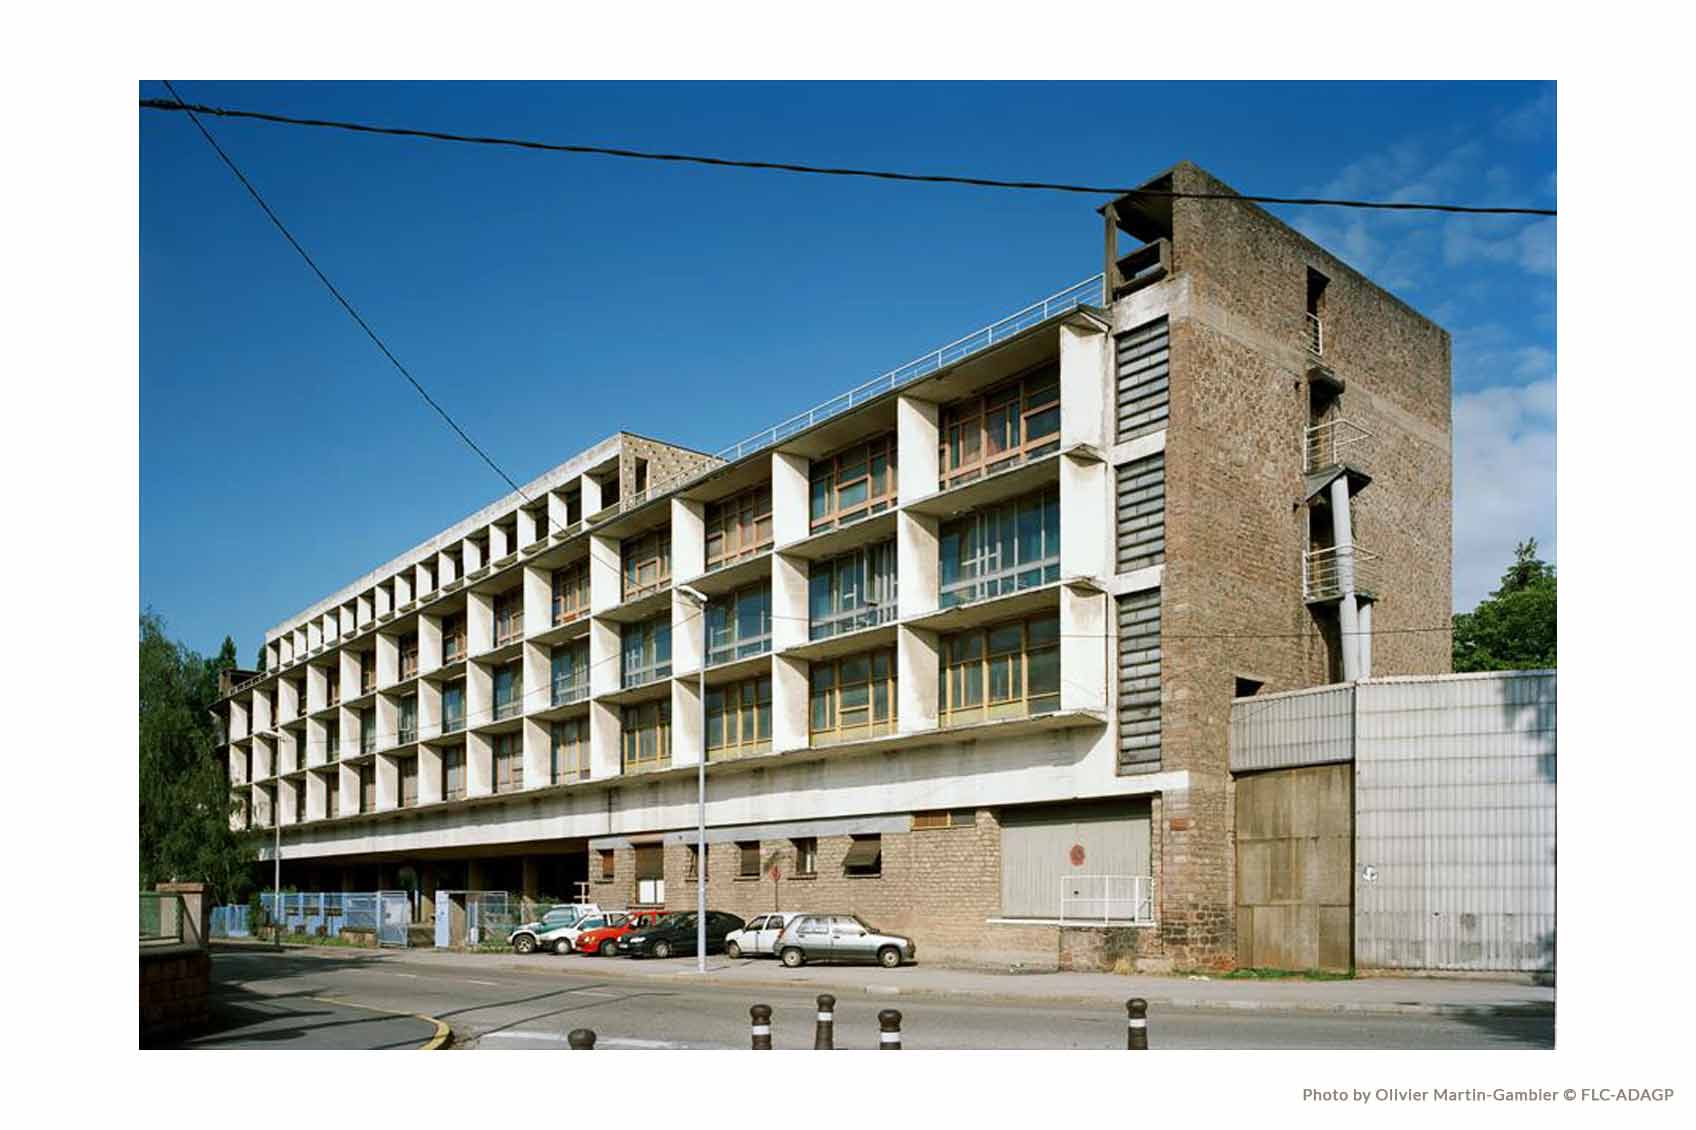 Usine Duval Le Corbusier Photo by Olivier Martin-Gambier © FLC-ADAGP